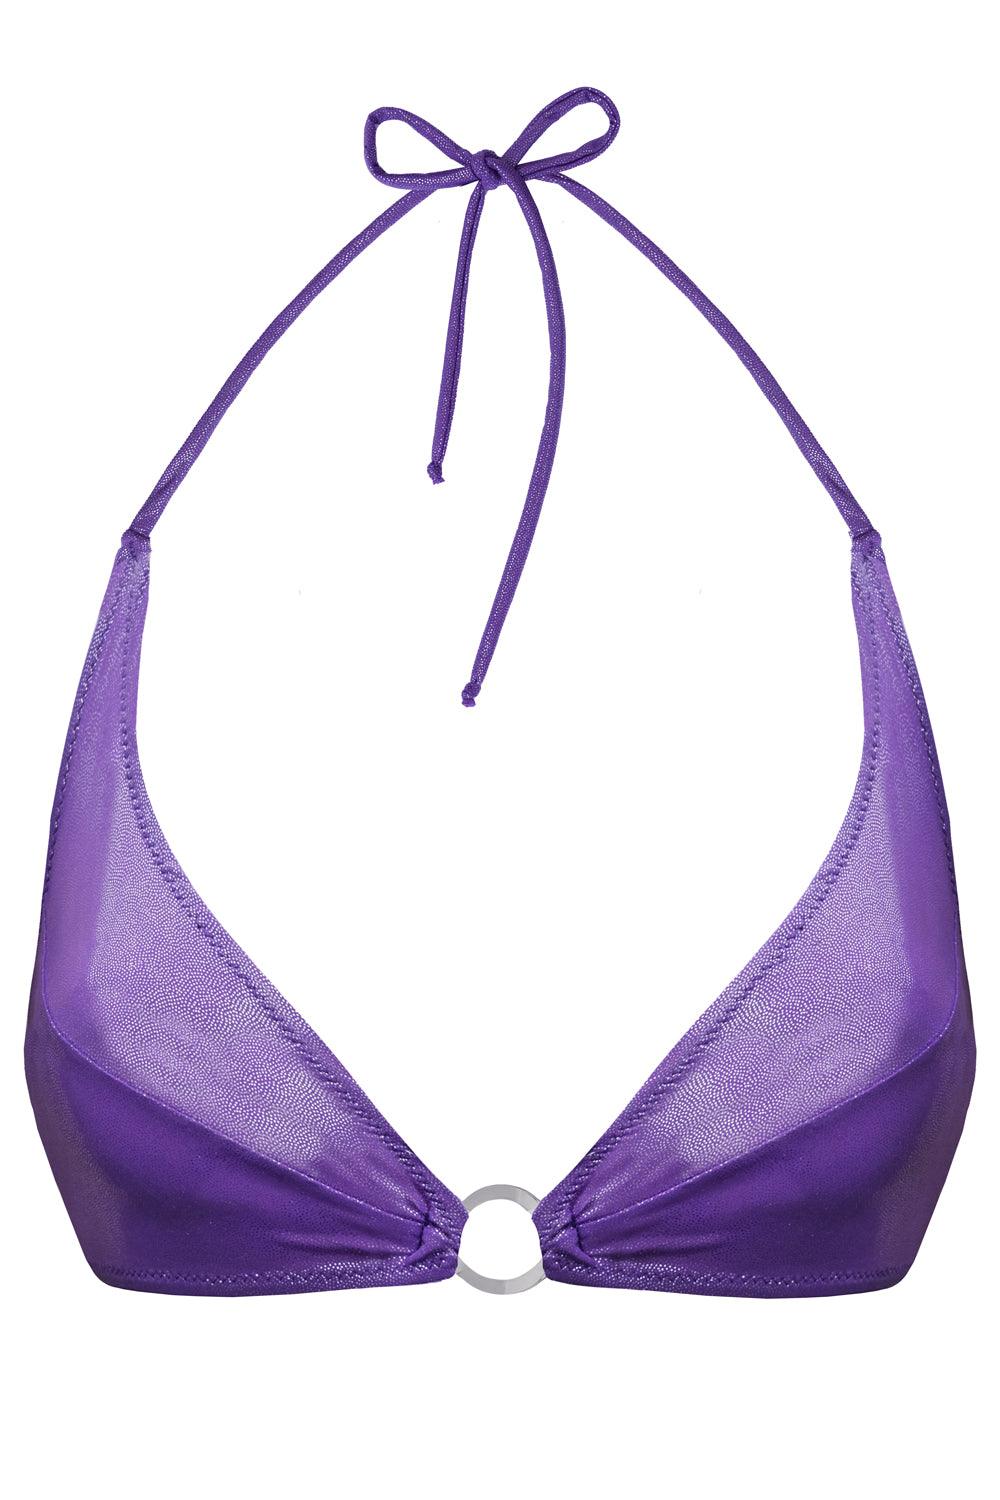 Titaniya Violet bikini top - Bikini top by yesUndress. Shop on yesUndress